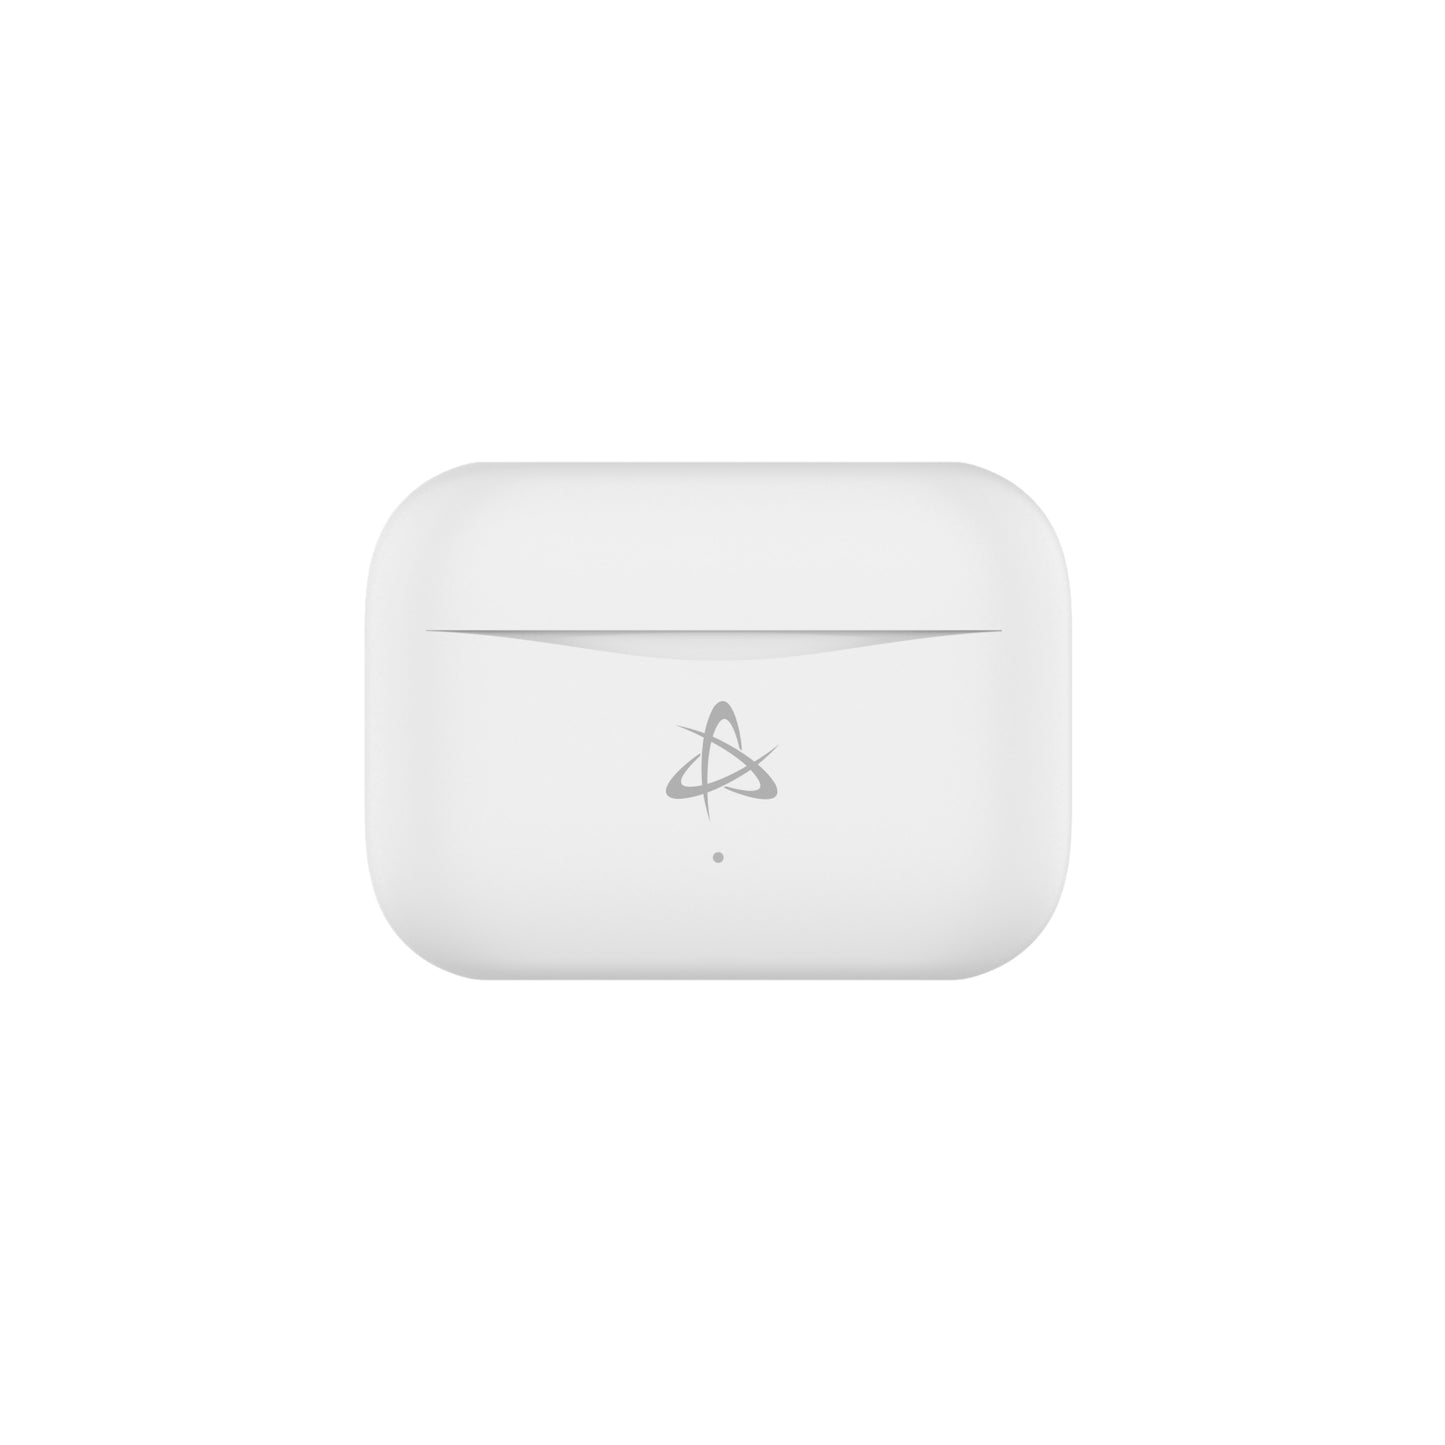 Bluetooth Austiņas ar Ilgstošu Akumulatoru, Sbox EB-TWS101 White